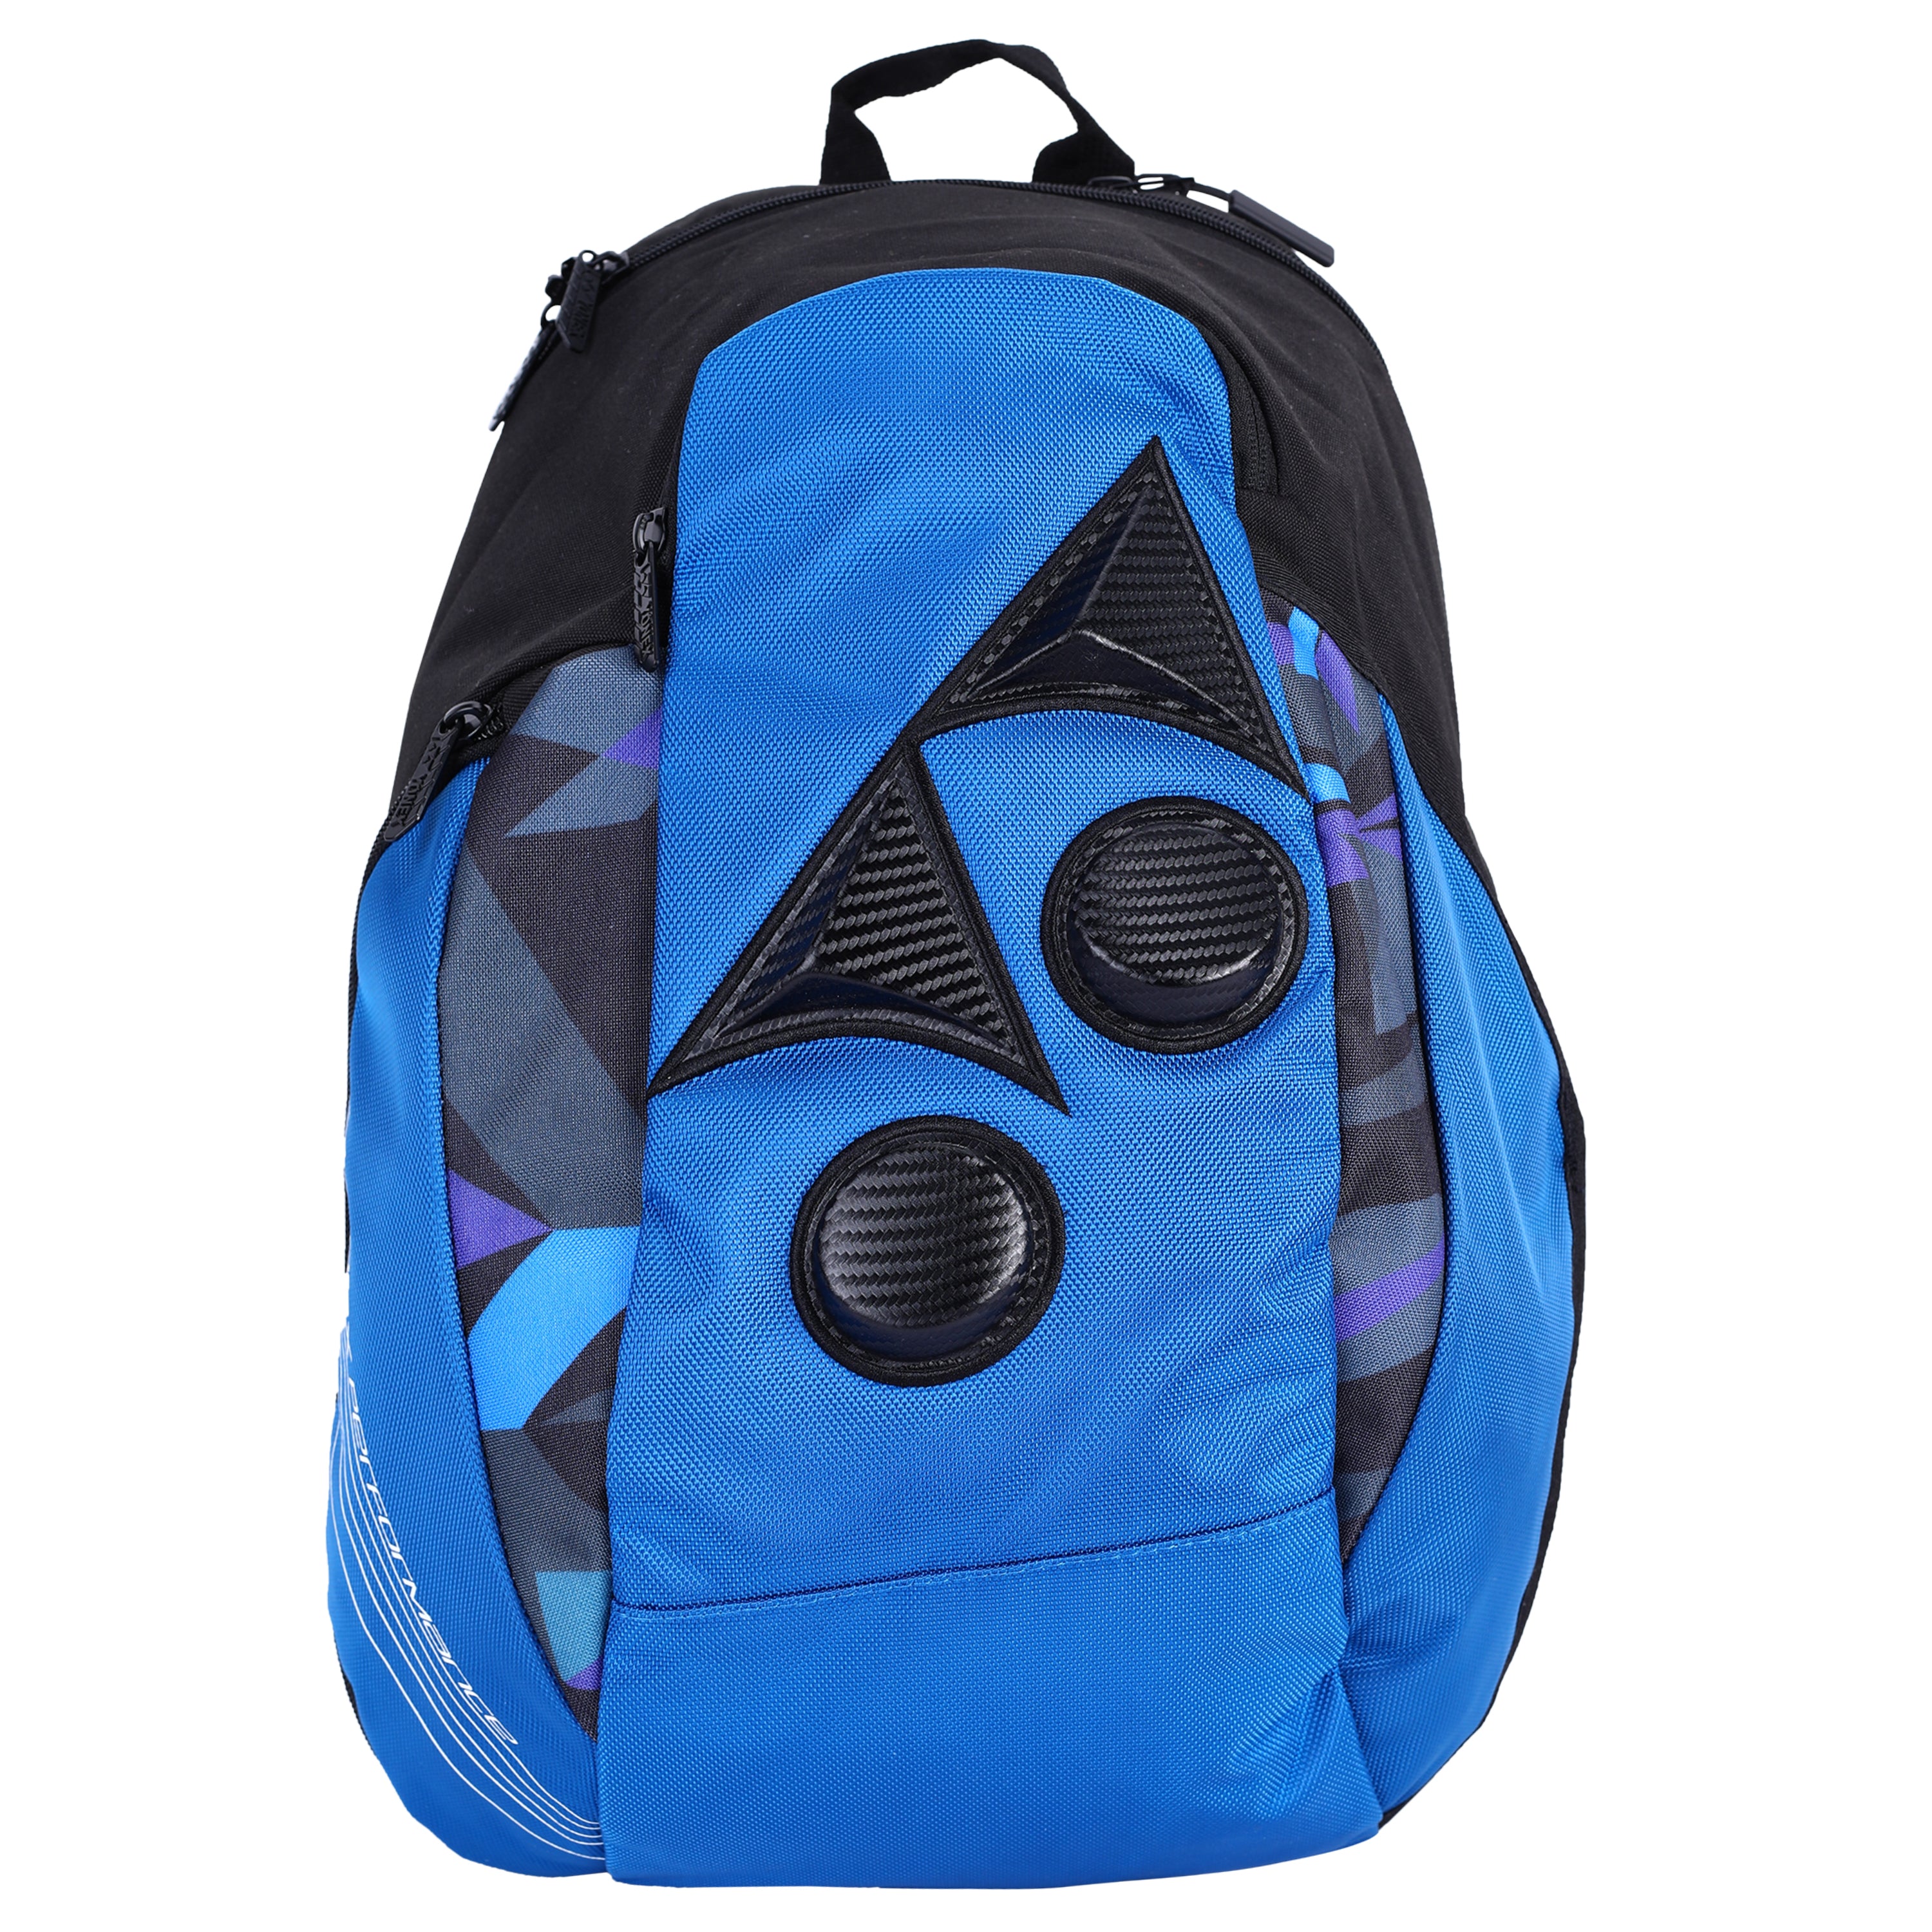 Yonex 22912M Backpack Badminton Kitbag Fine Blue